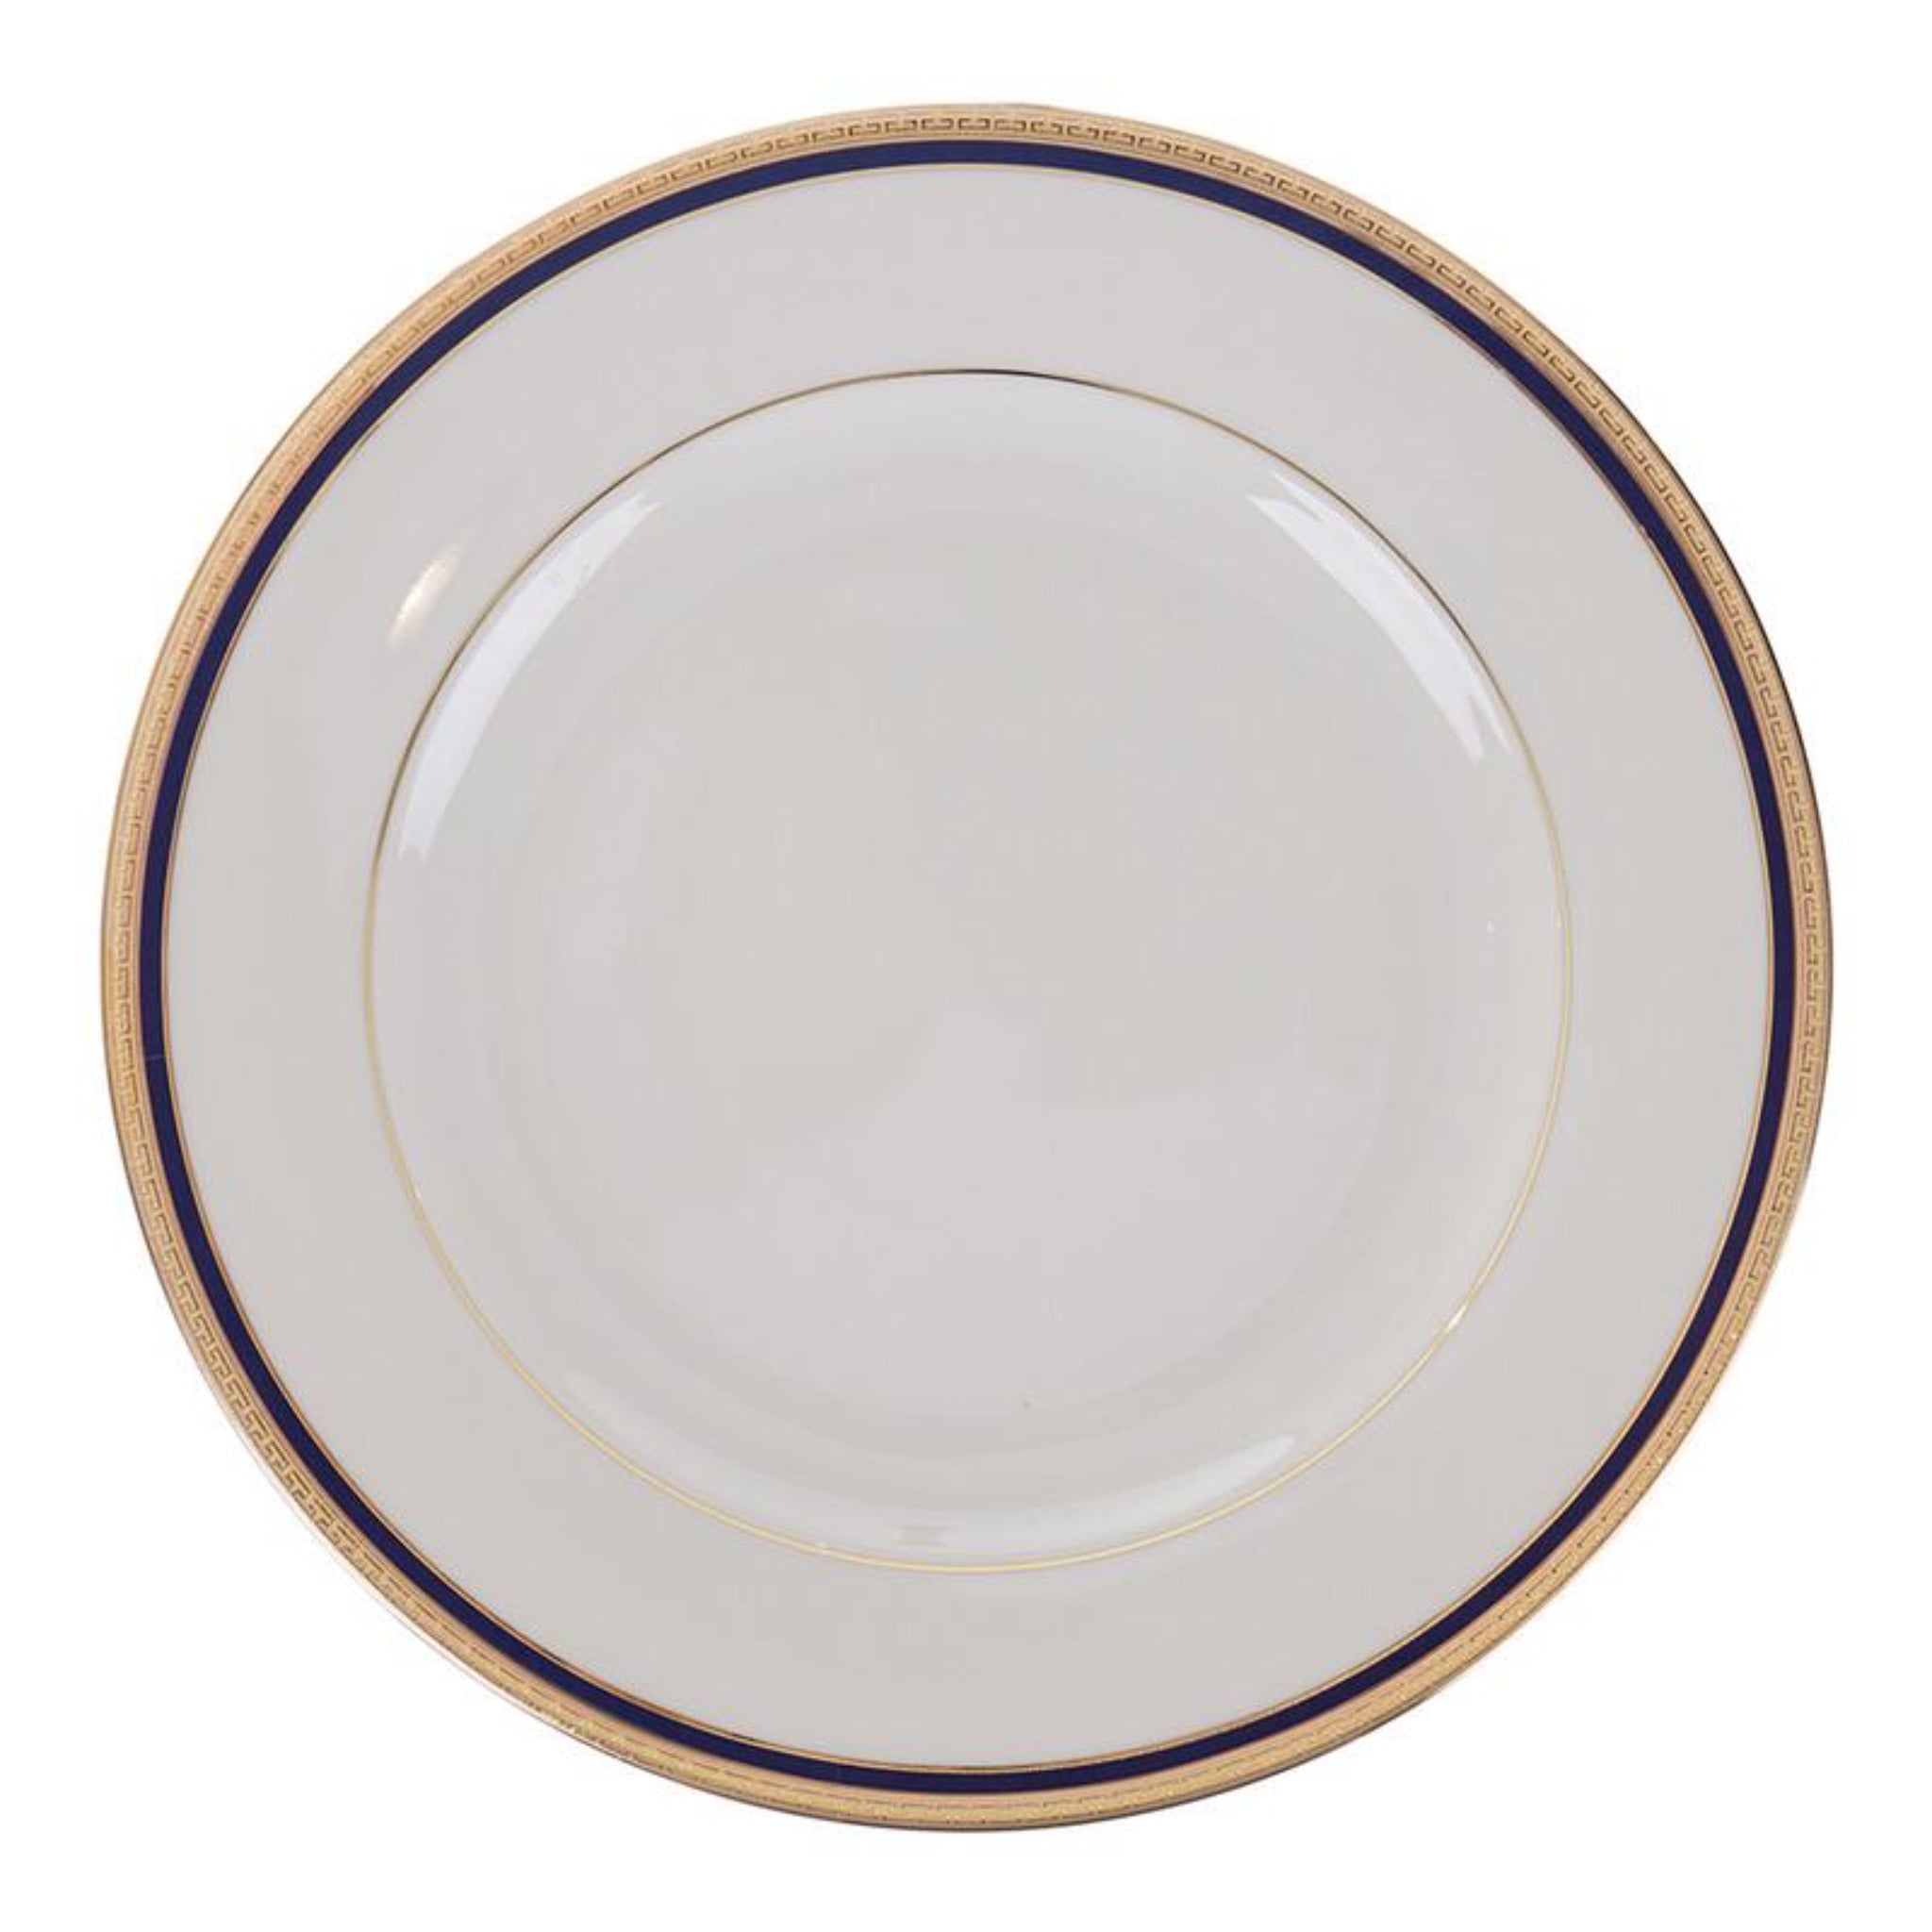 Falkenporzellan Dinner Set 112pcs - Porcelain - Blue & Gold - 1300040